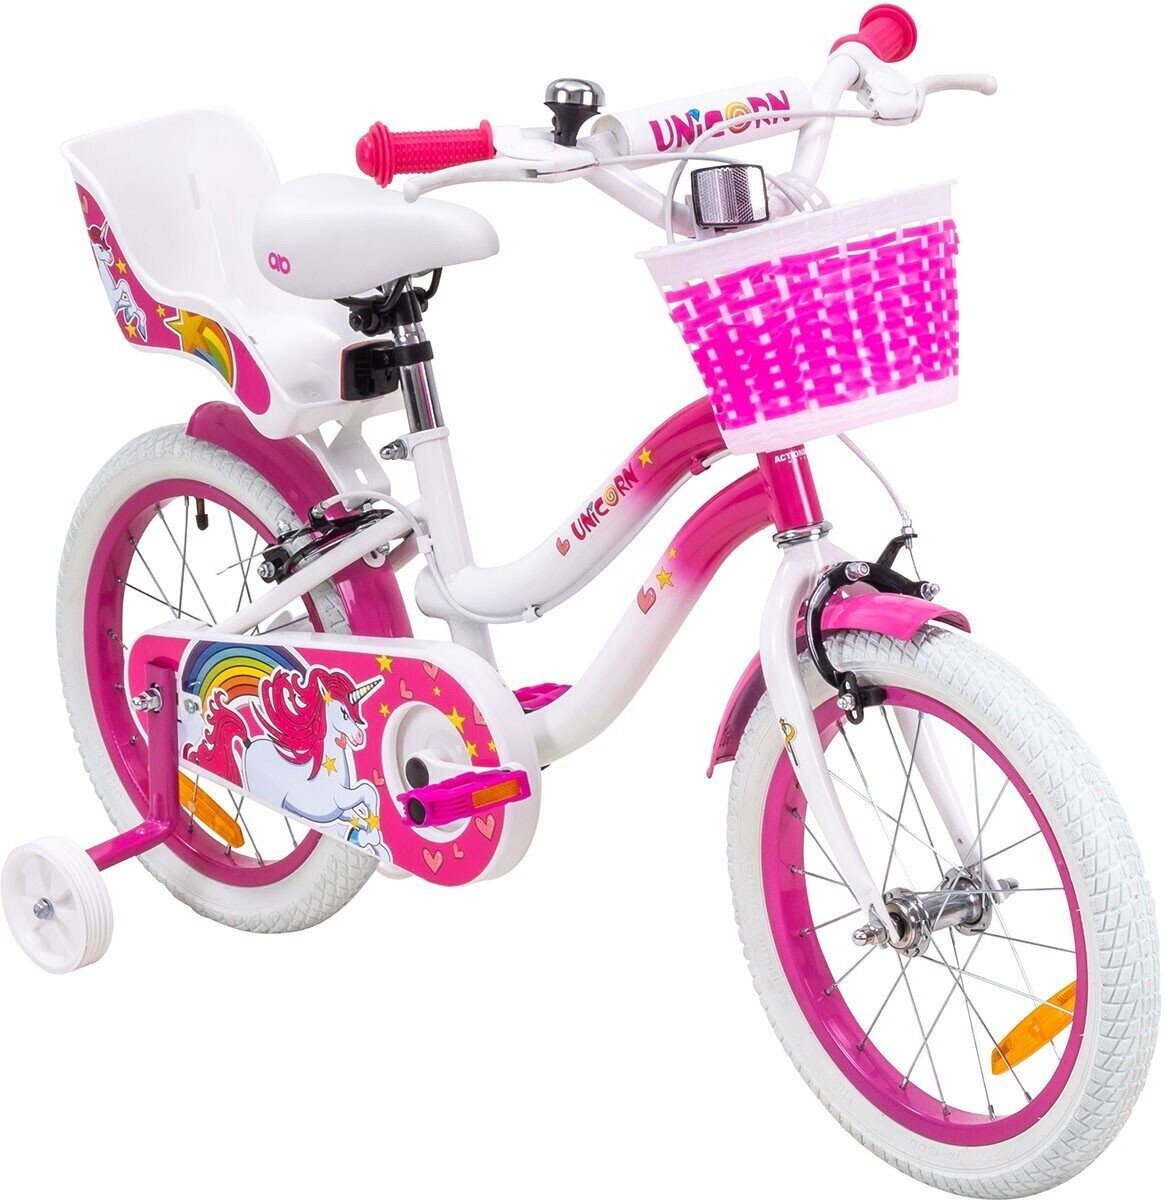 Actionbikes Kinderfahrrad Unicorn mit Stützräder 16 pink ab 119